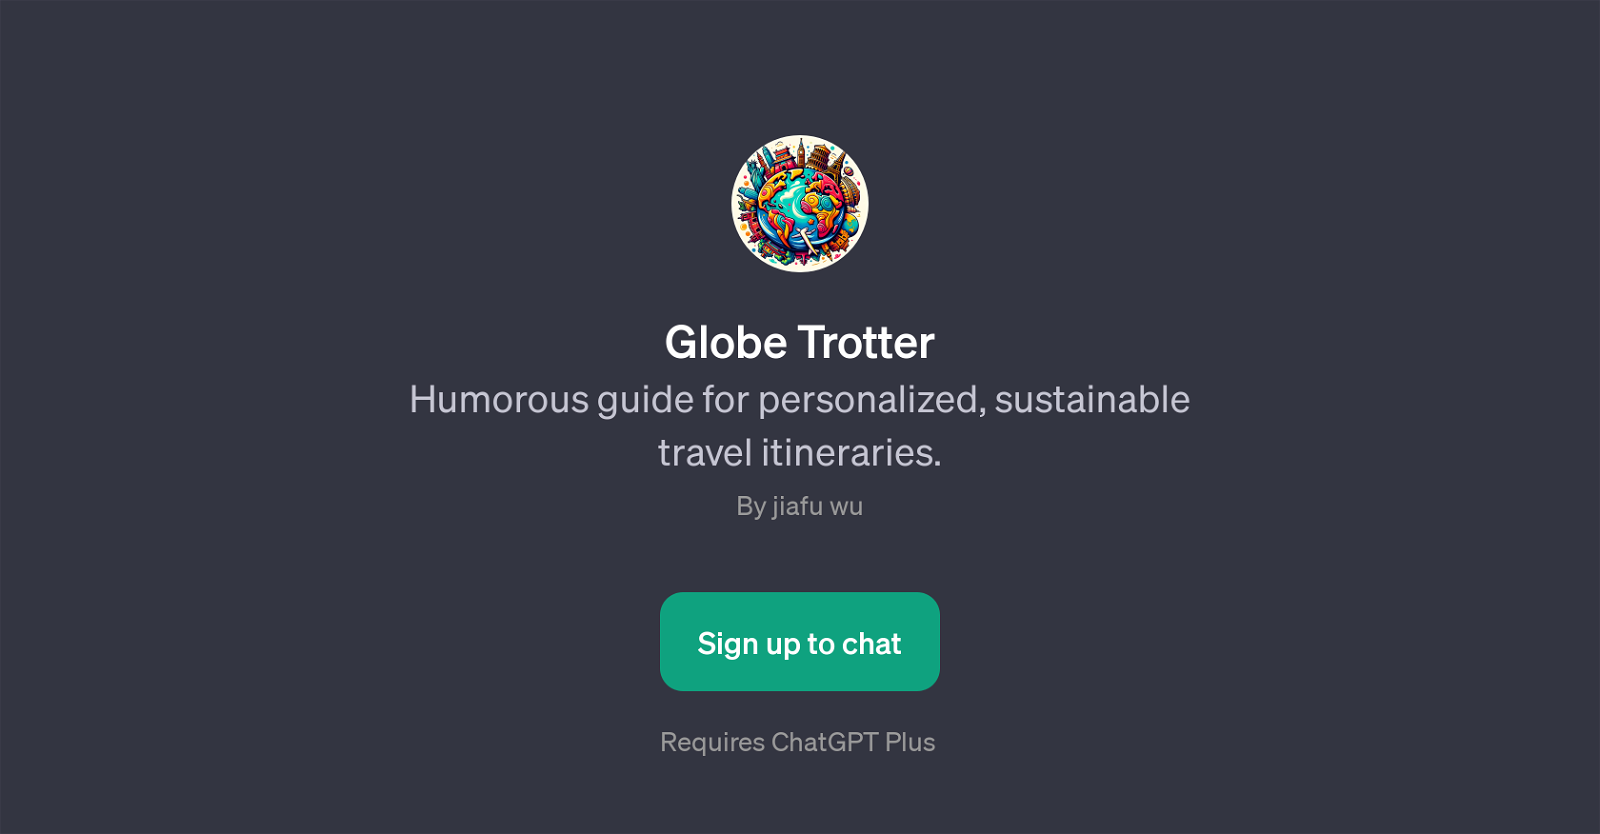 Globe Trotter website